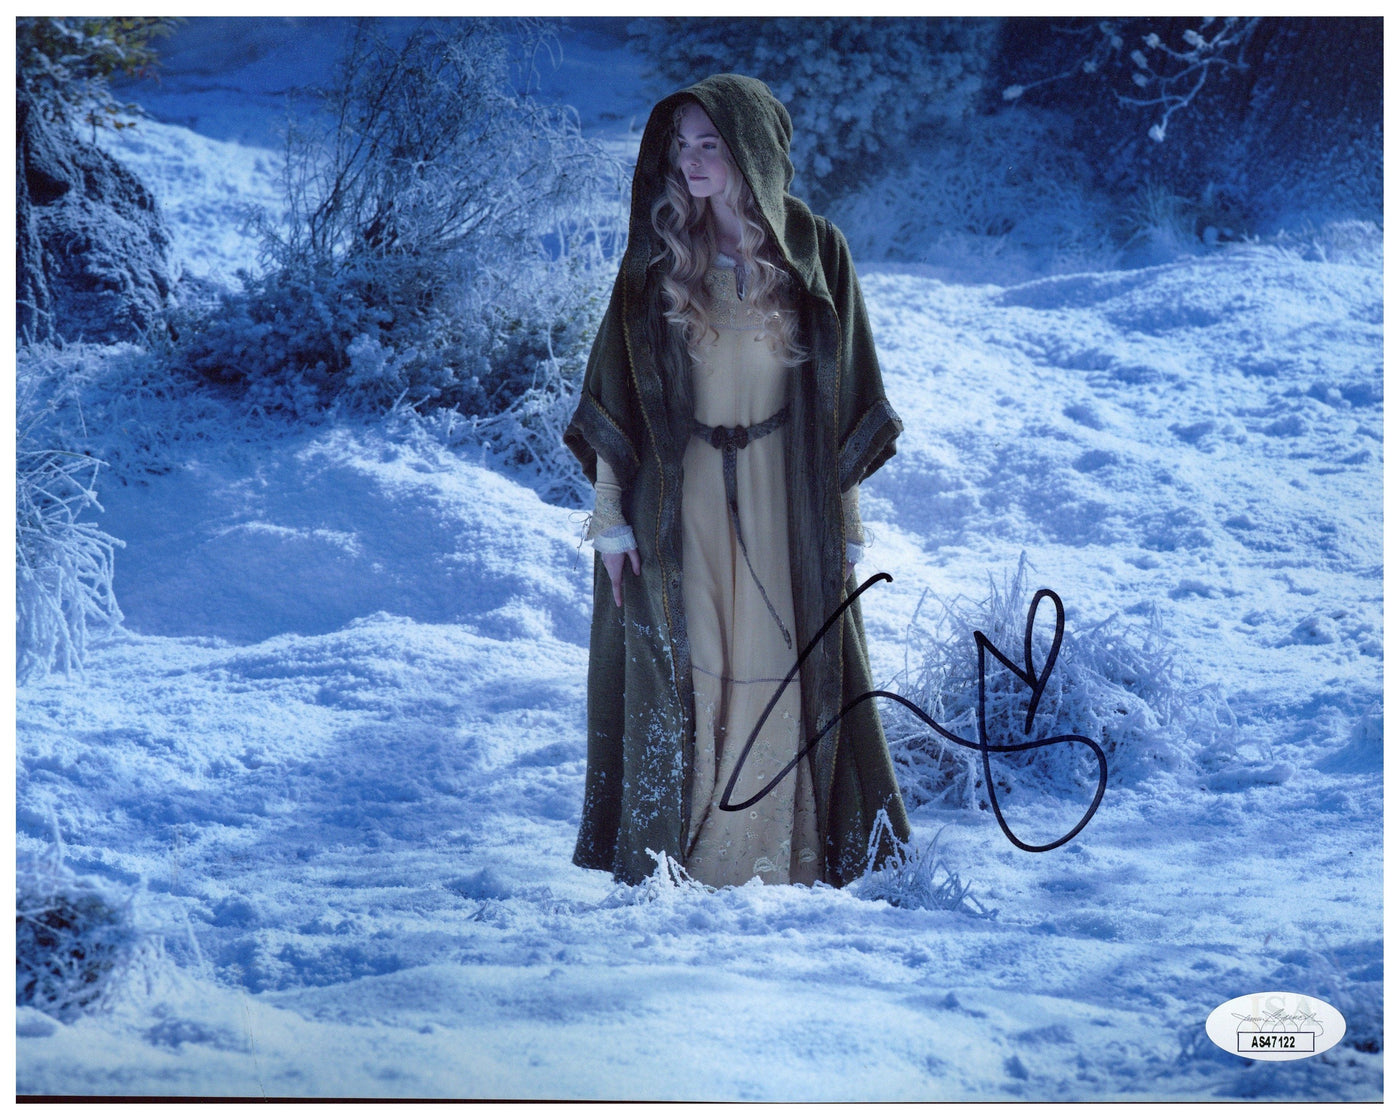 Elle Fanning Signed 8x10 Photo Maleficent Film Autographed JSA COA